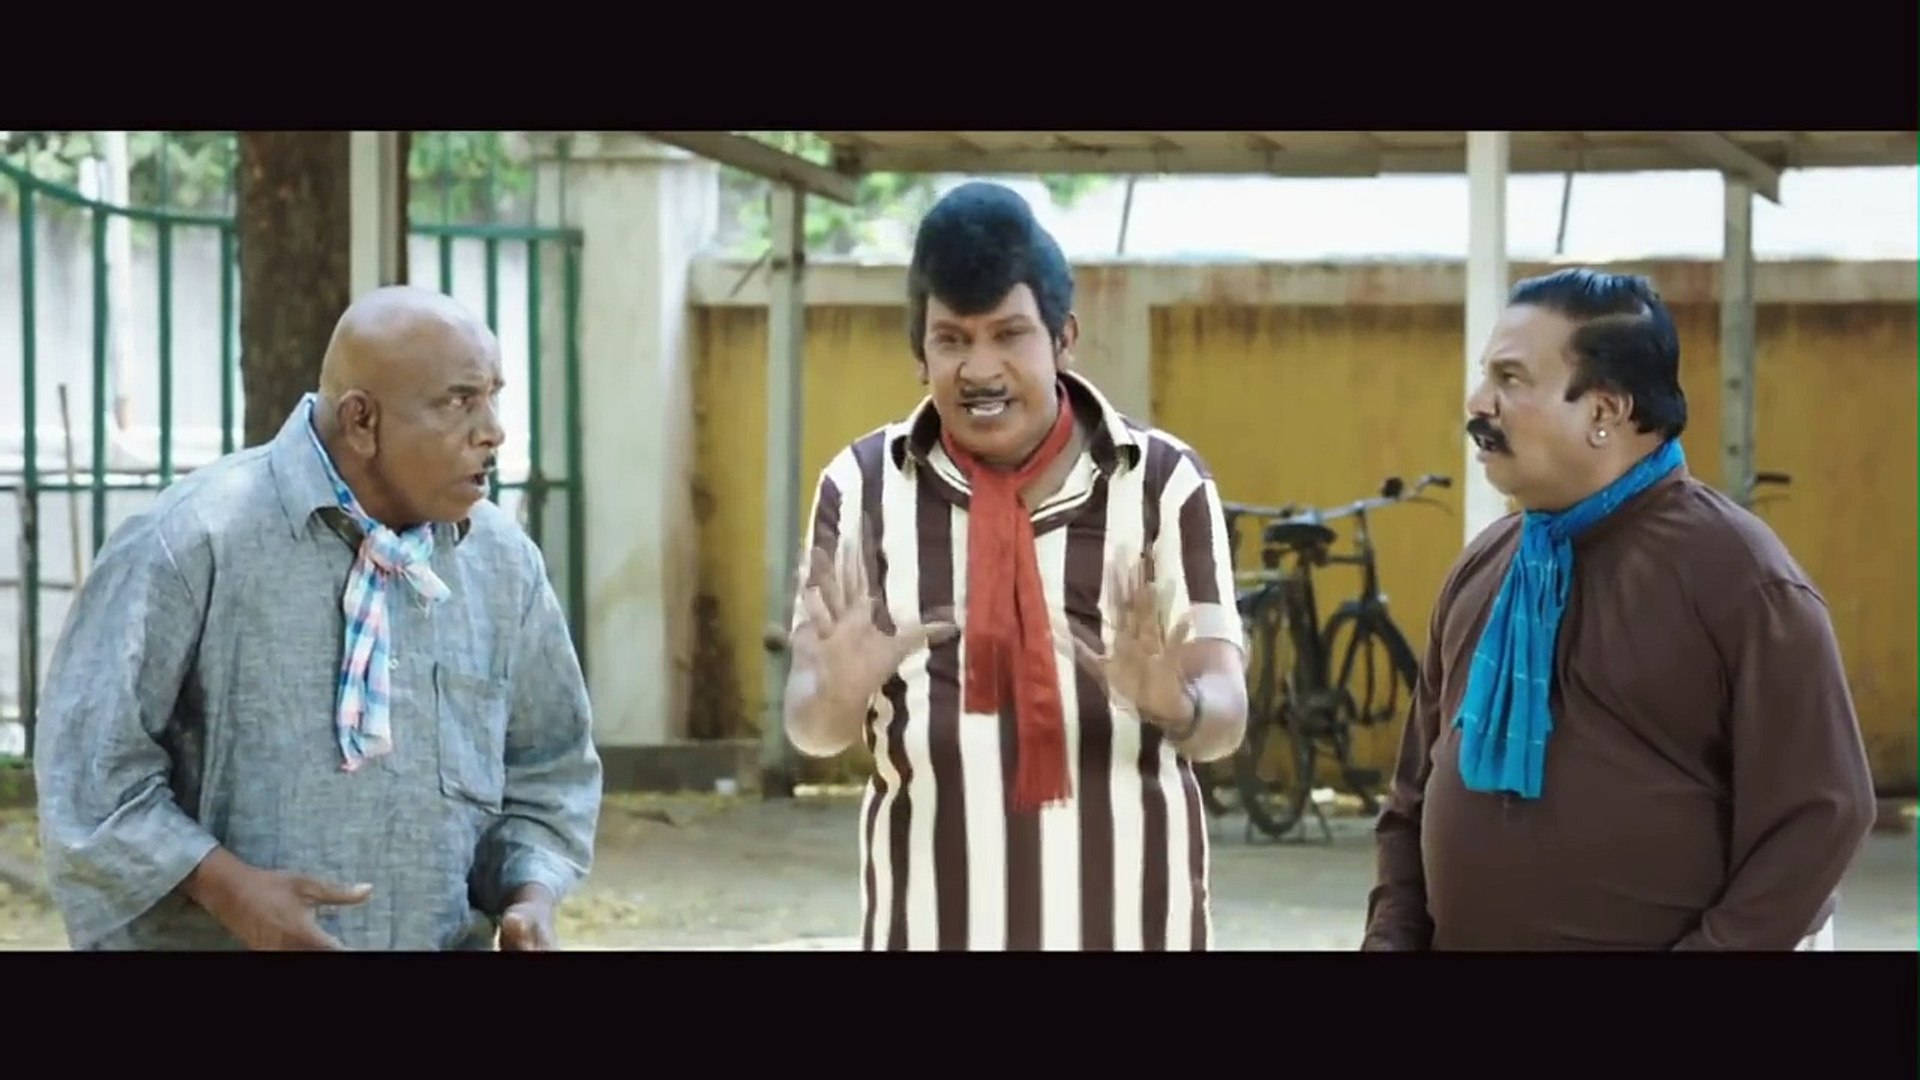 Actor Vadivelu With Indian Comedians Wallpaper